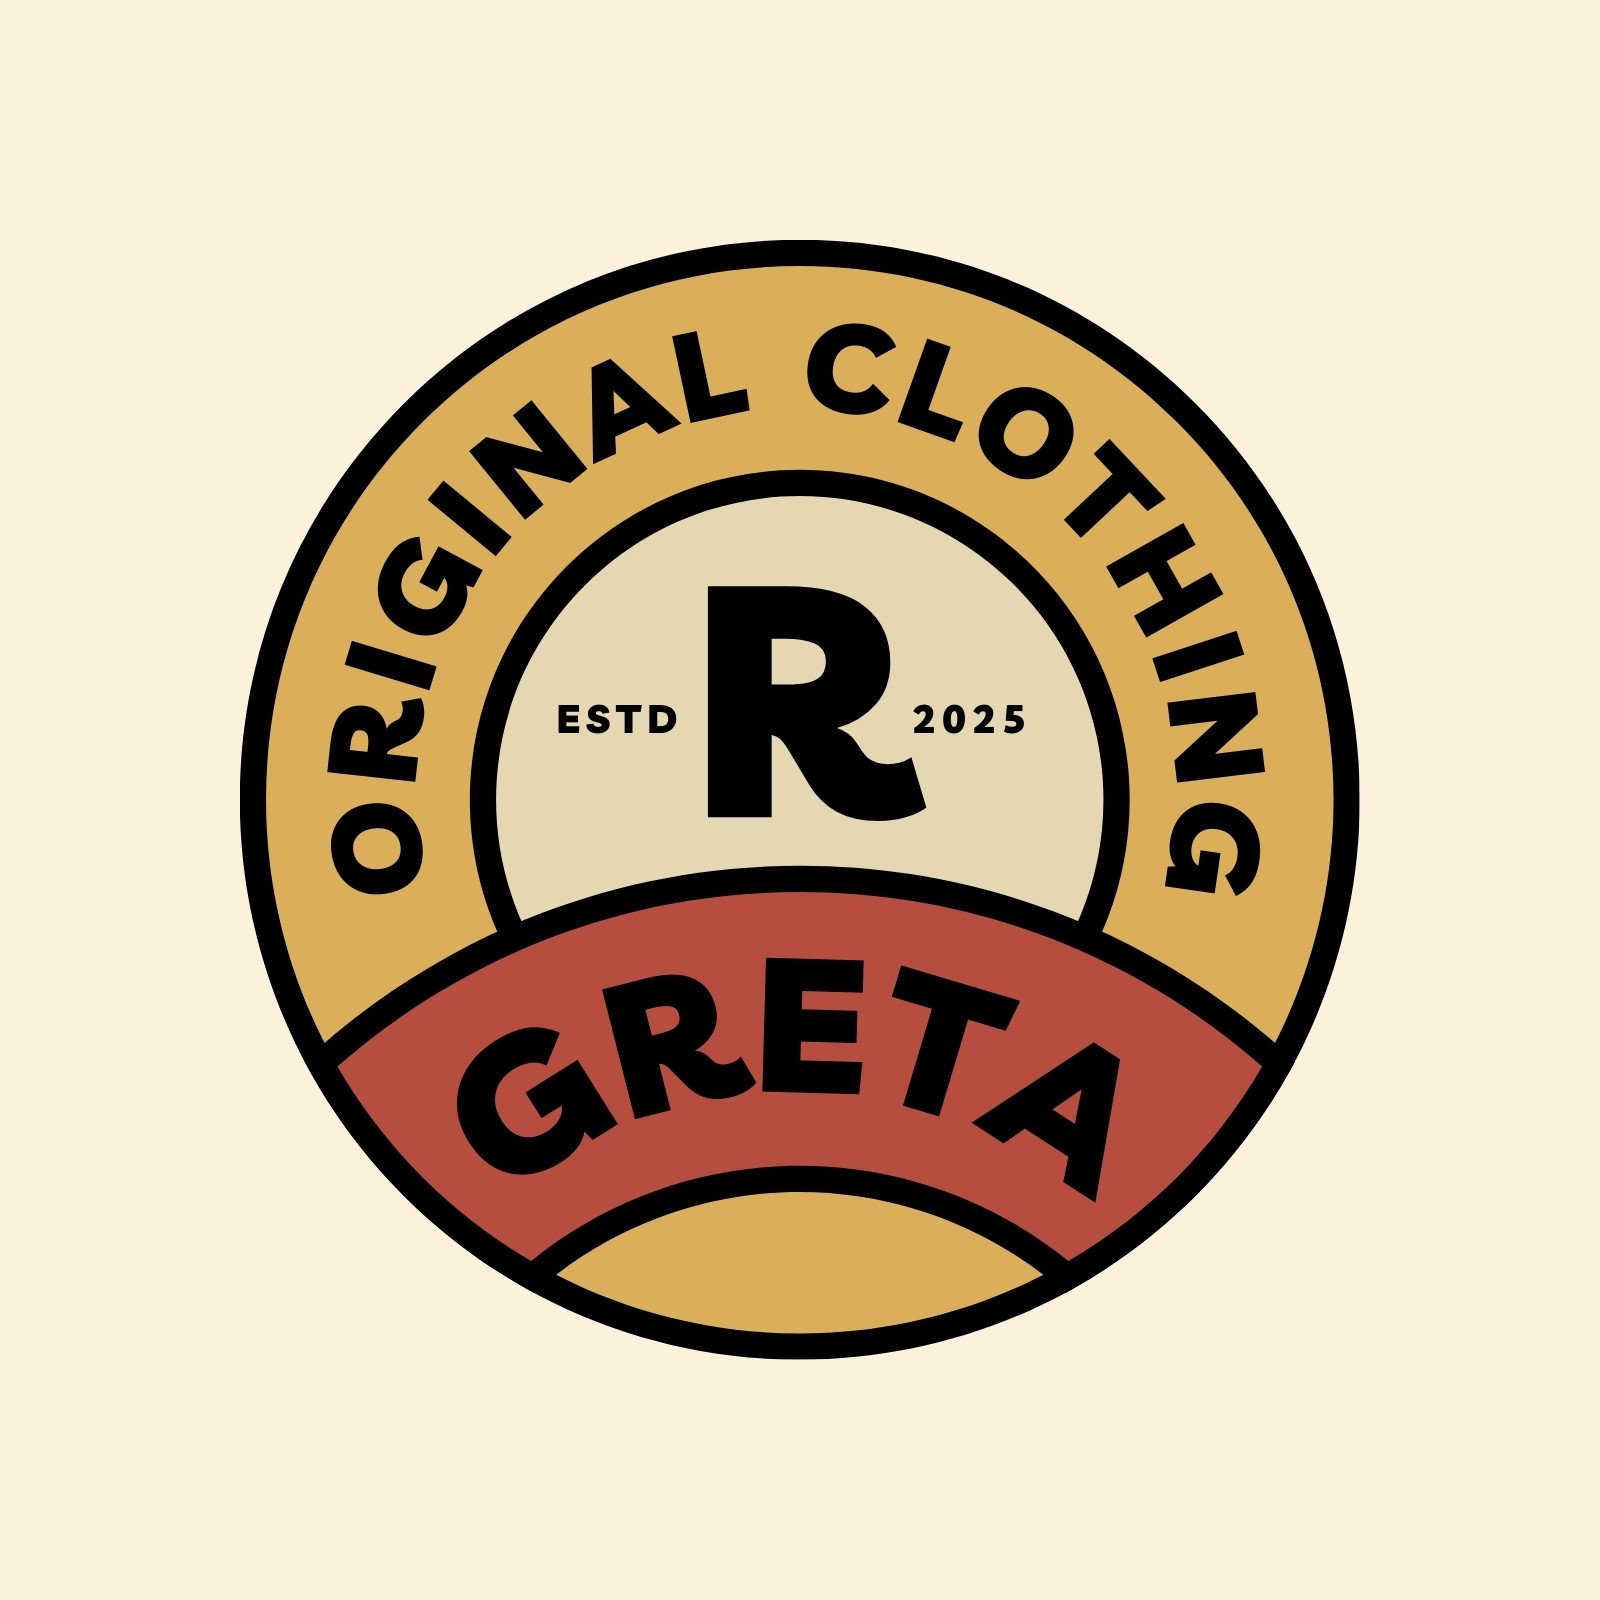 vintage clothing store logo